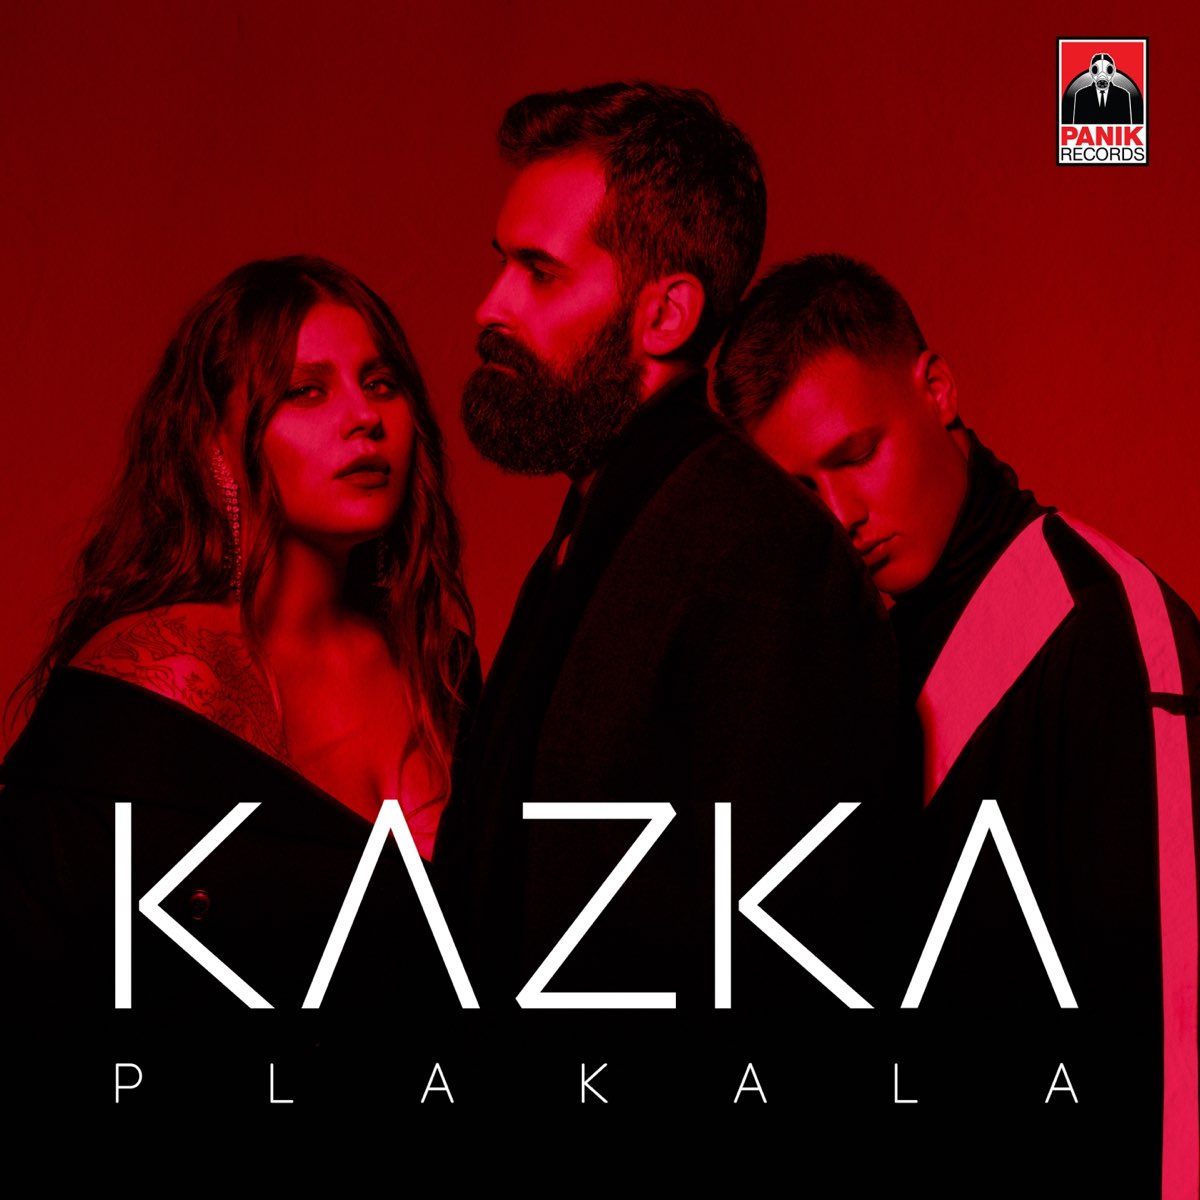 Plakala - Single - Album by KAZKA - Apple Music